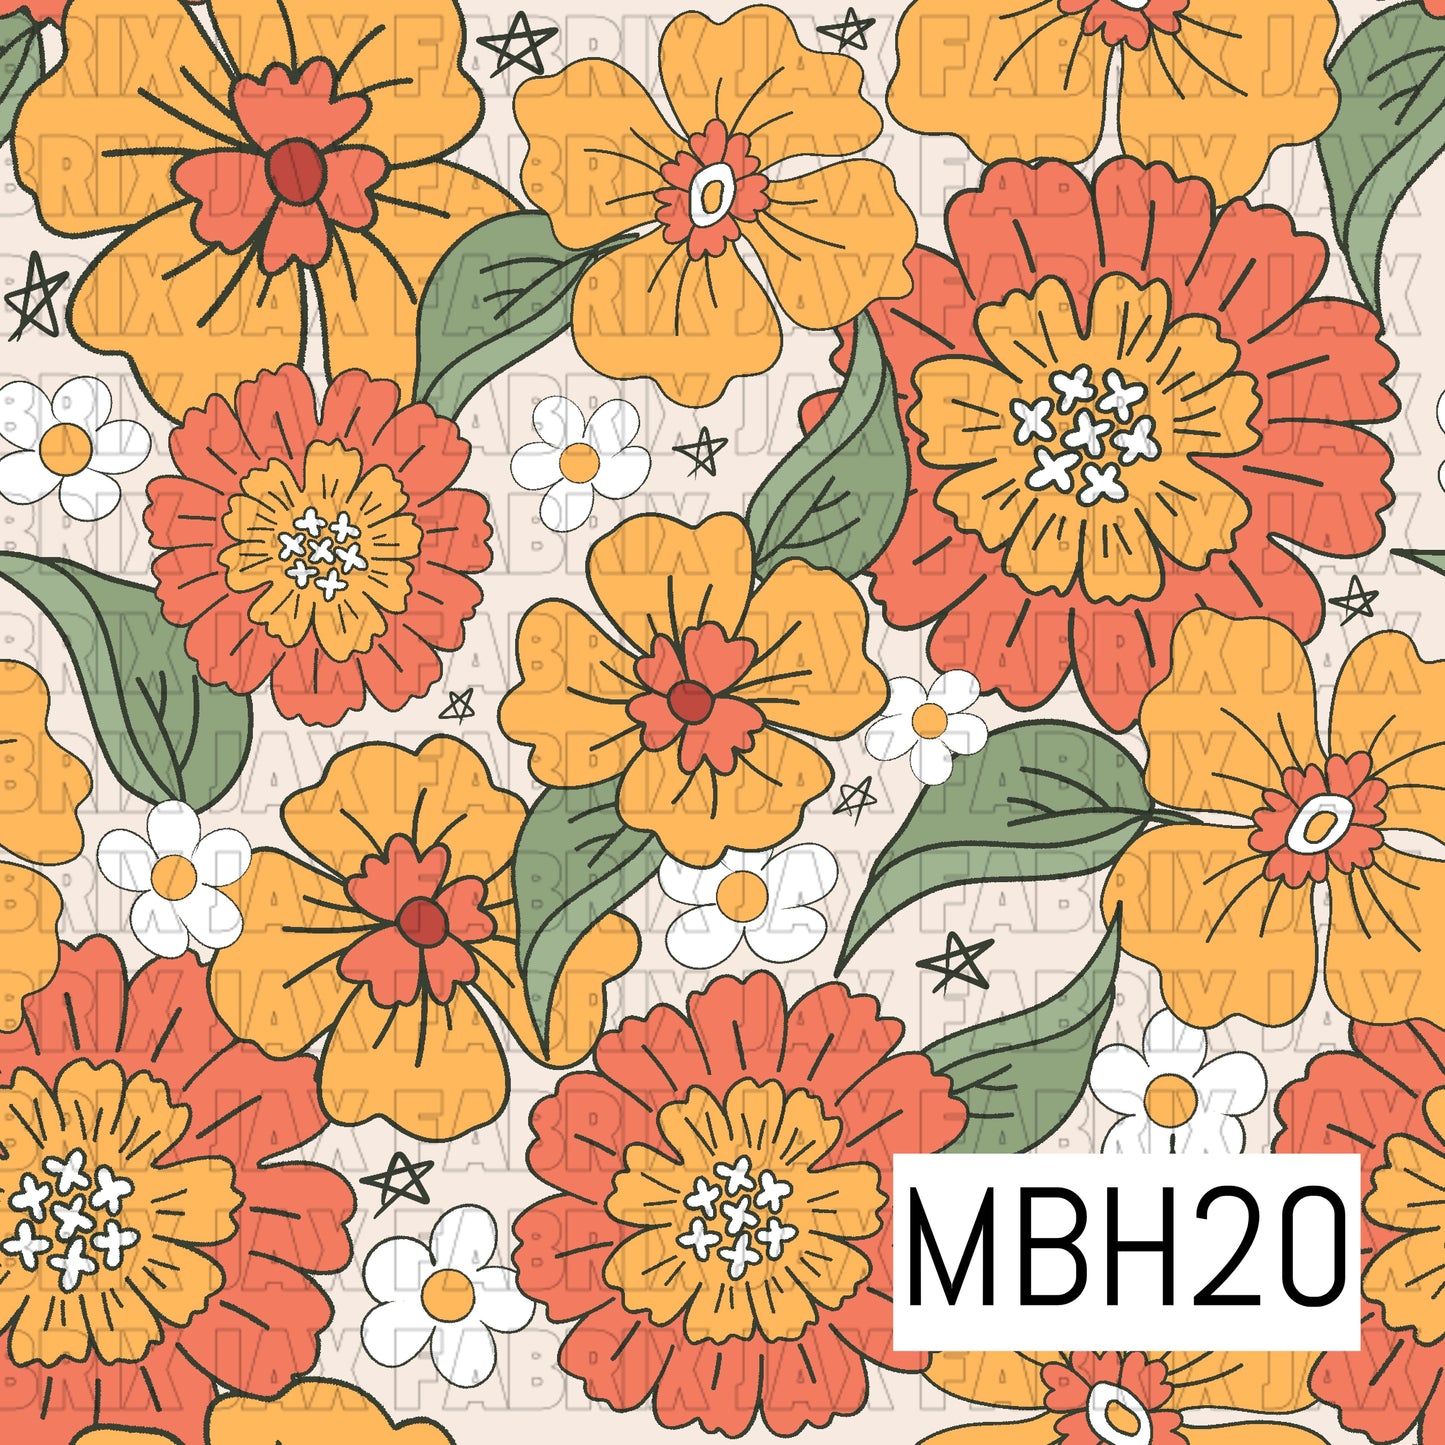 Thanksgiving Floral MBH20